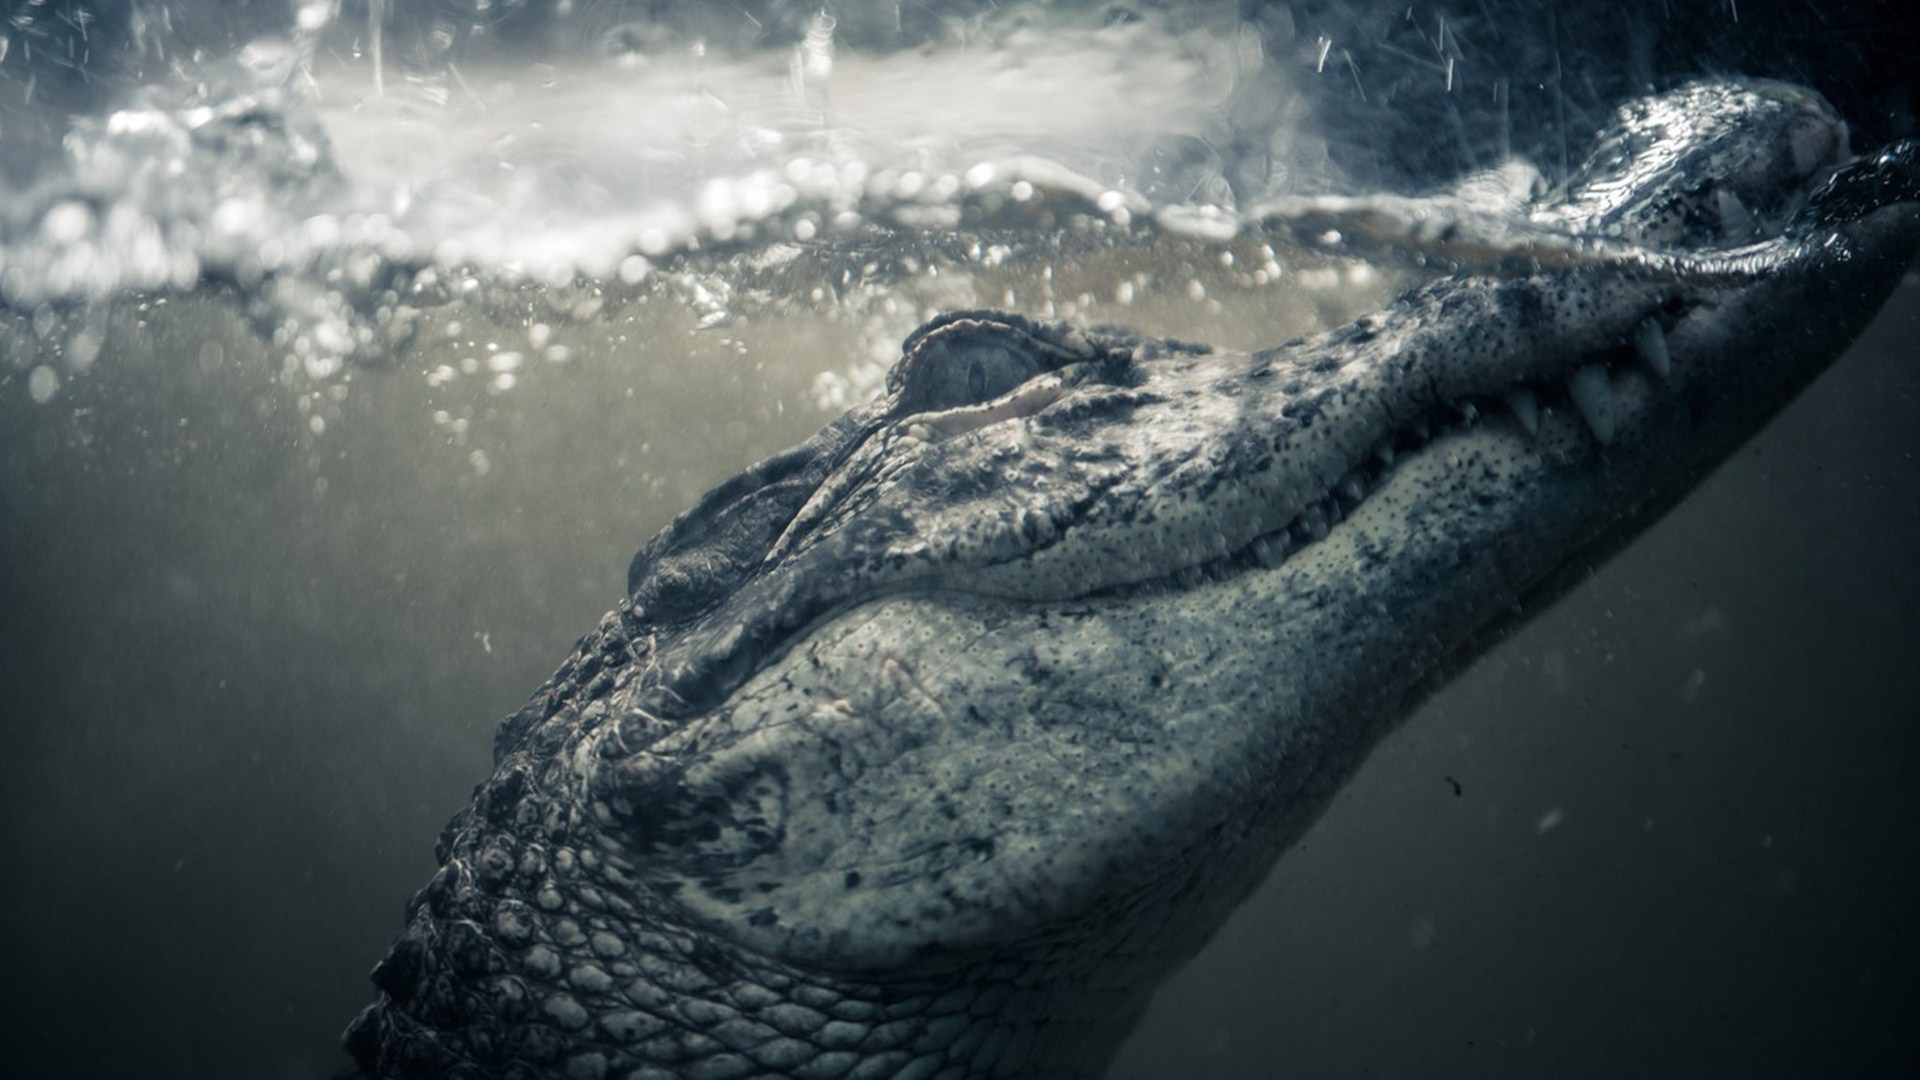 Crocodile: The big croc species found across Africa, Predator. 1920x1080 Full HD Wallpaper.